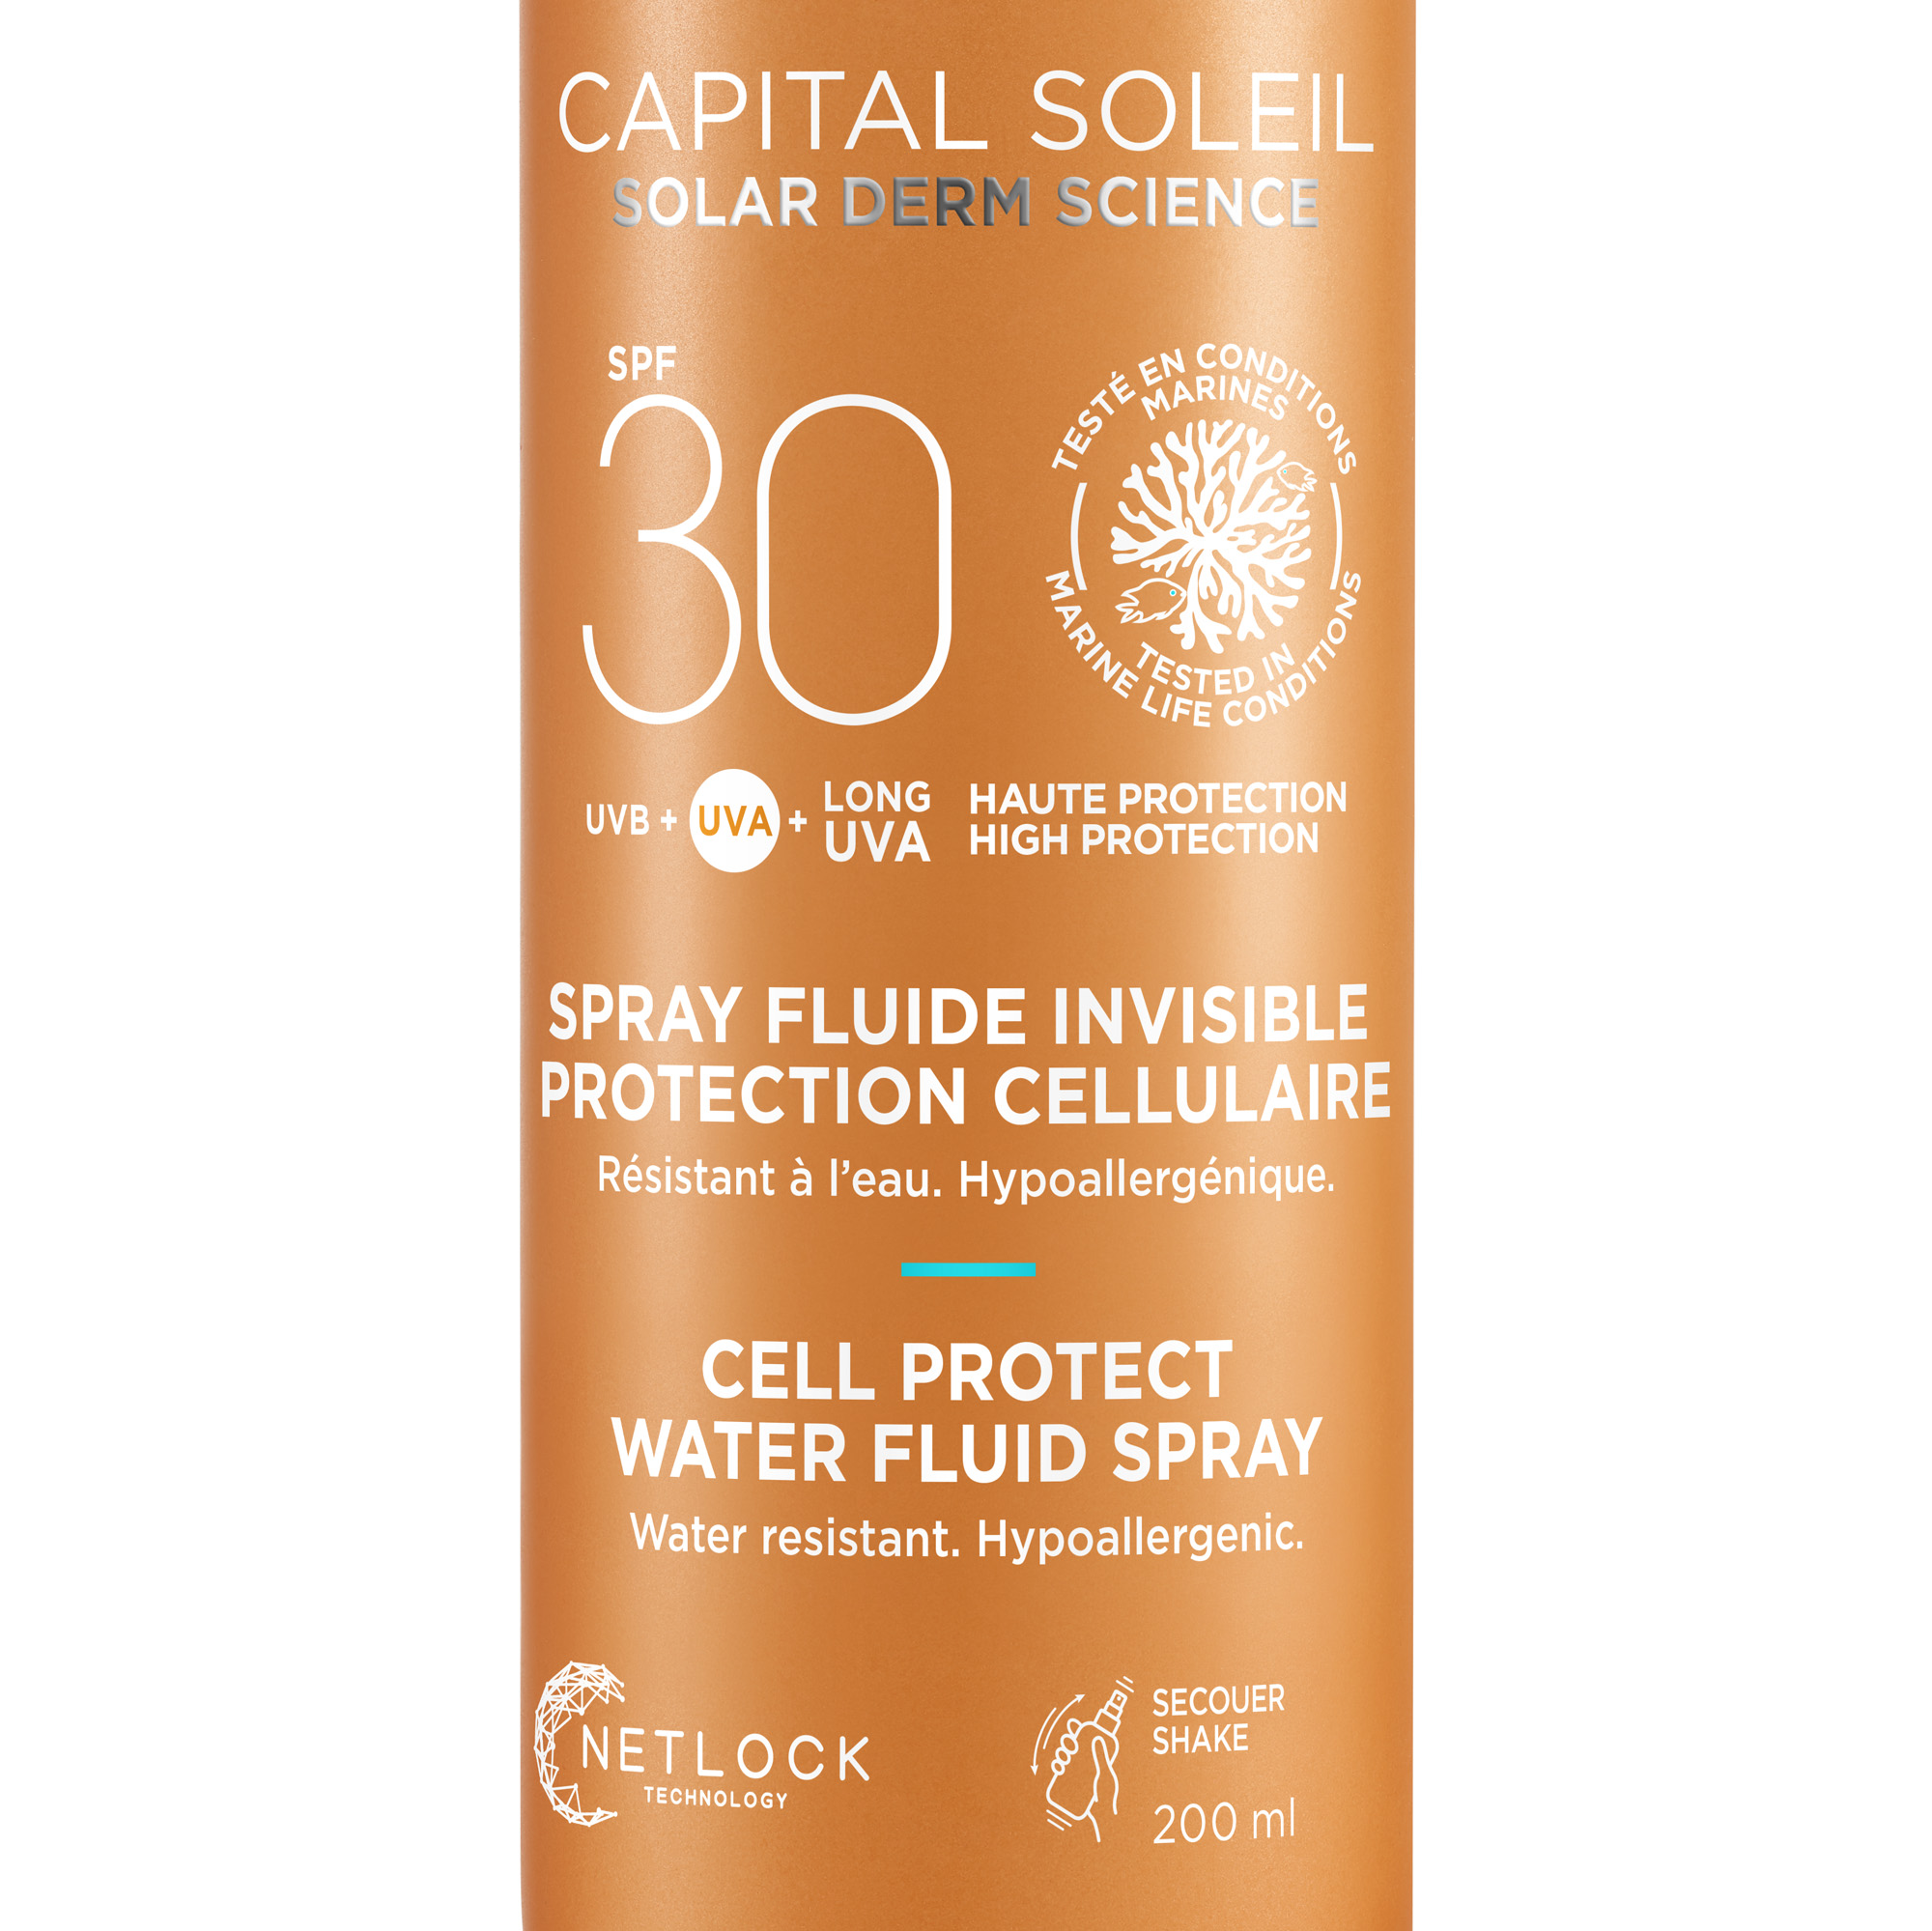 Солнцезащитный водостойкий спрей-флюид Vichy Capital Soleil для тела, SPF 30, 200 мл (MB494600) - фото 3